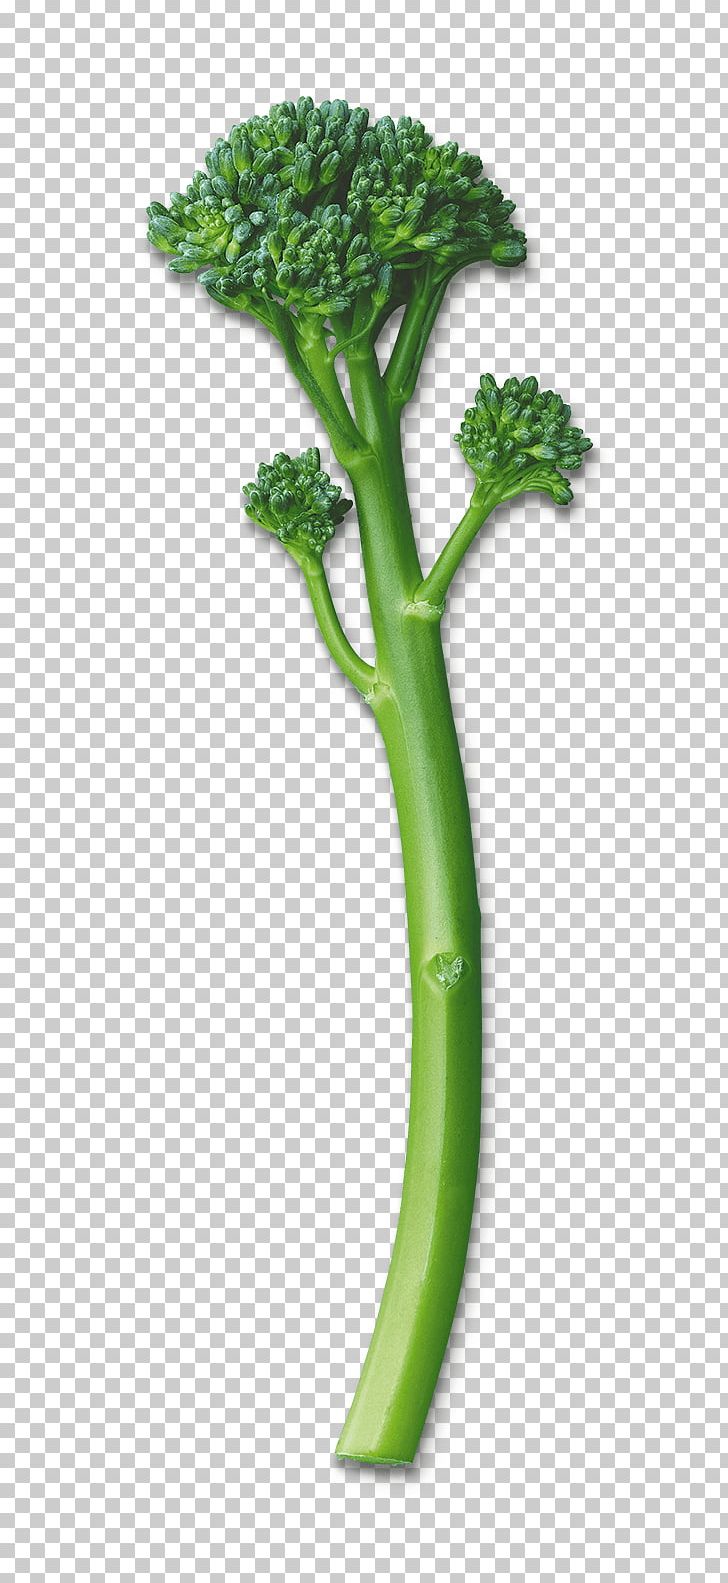 Rapini Broccolini Leaf Vegetable PNG, Clipart, Brassica Oleracea, Broccoli, Broccolini, Butter, Chili Pepper Free PNG Download